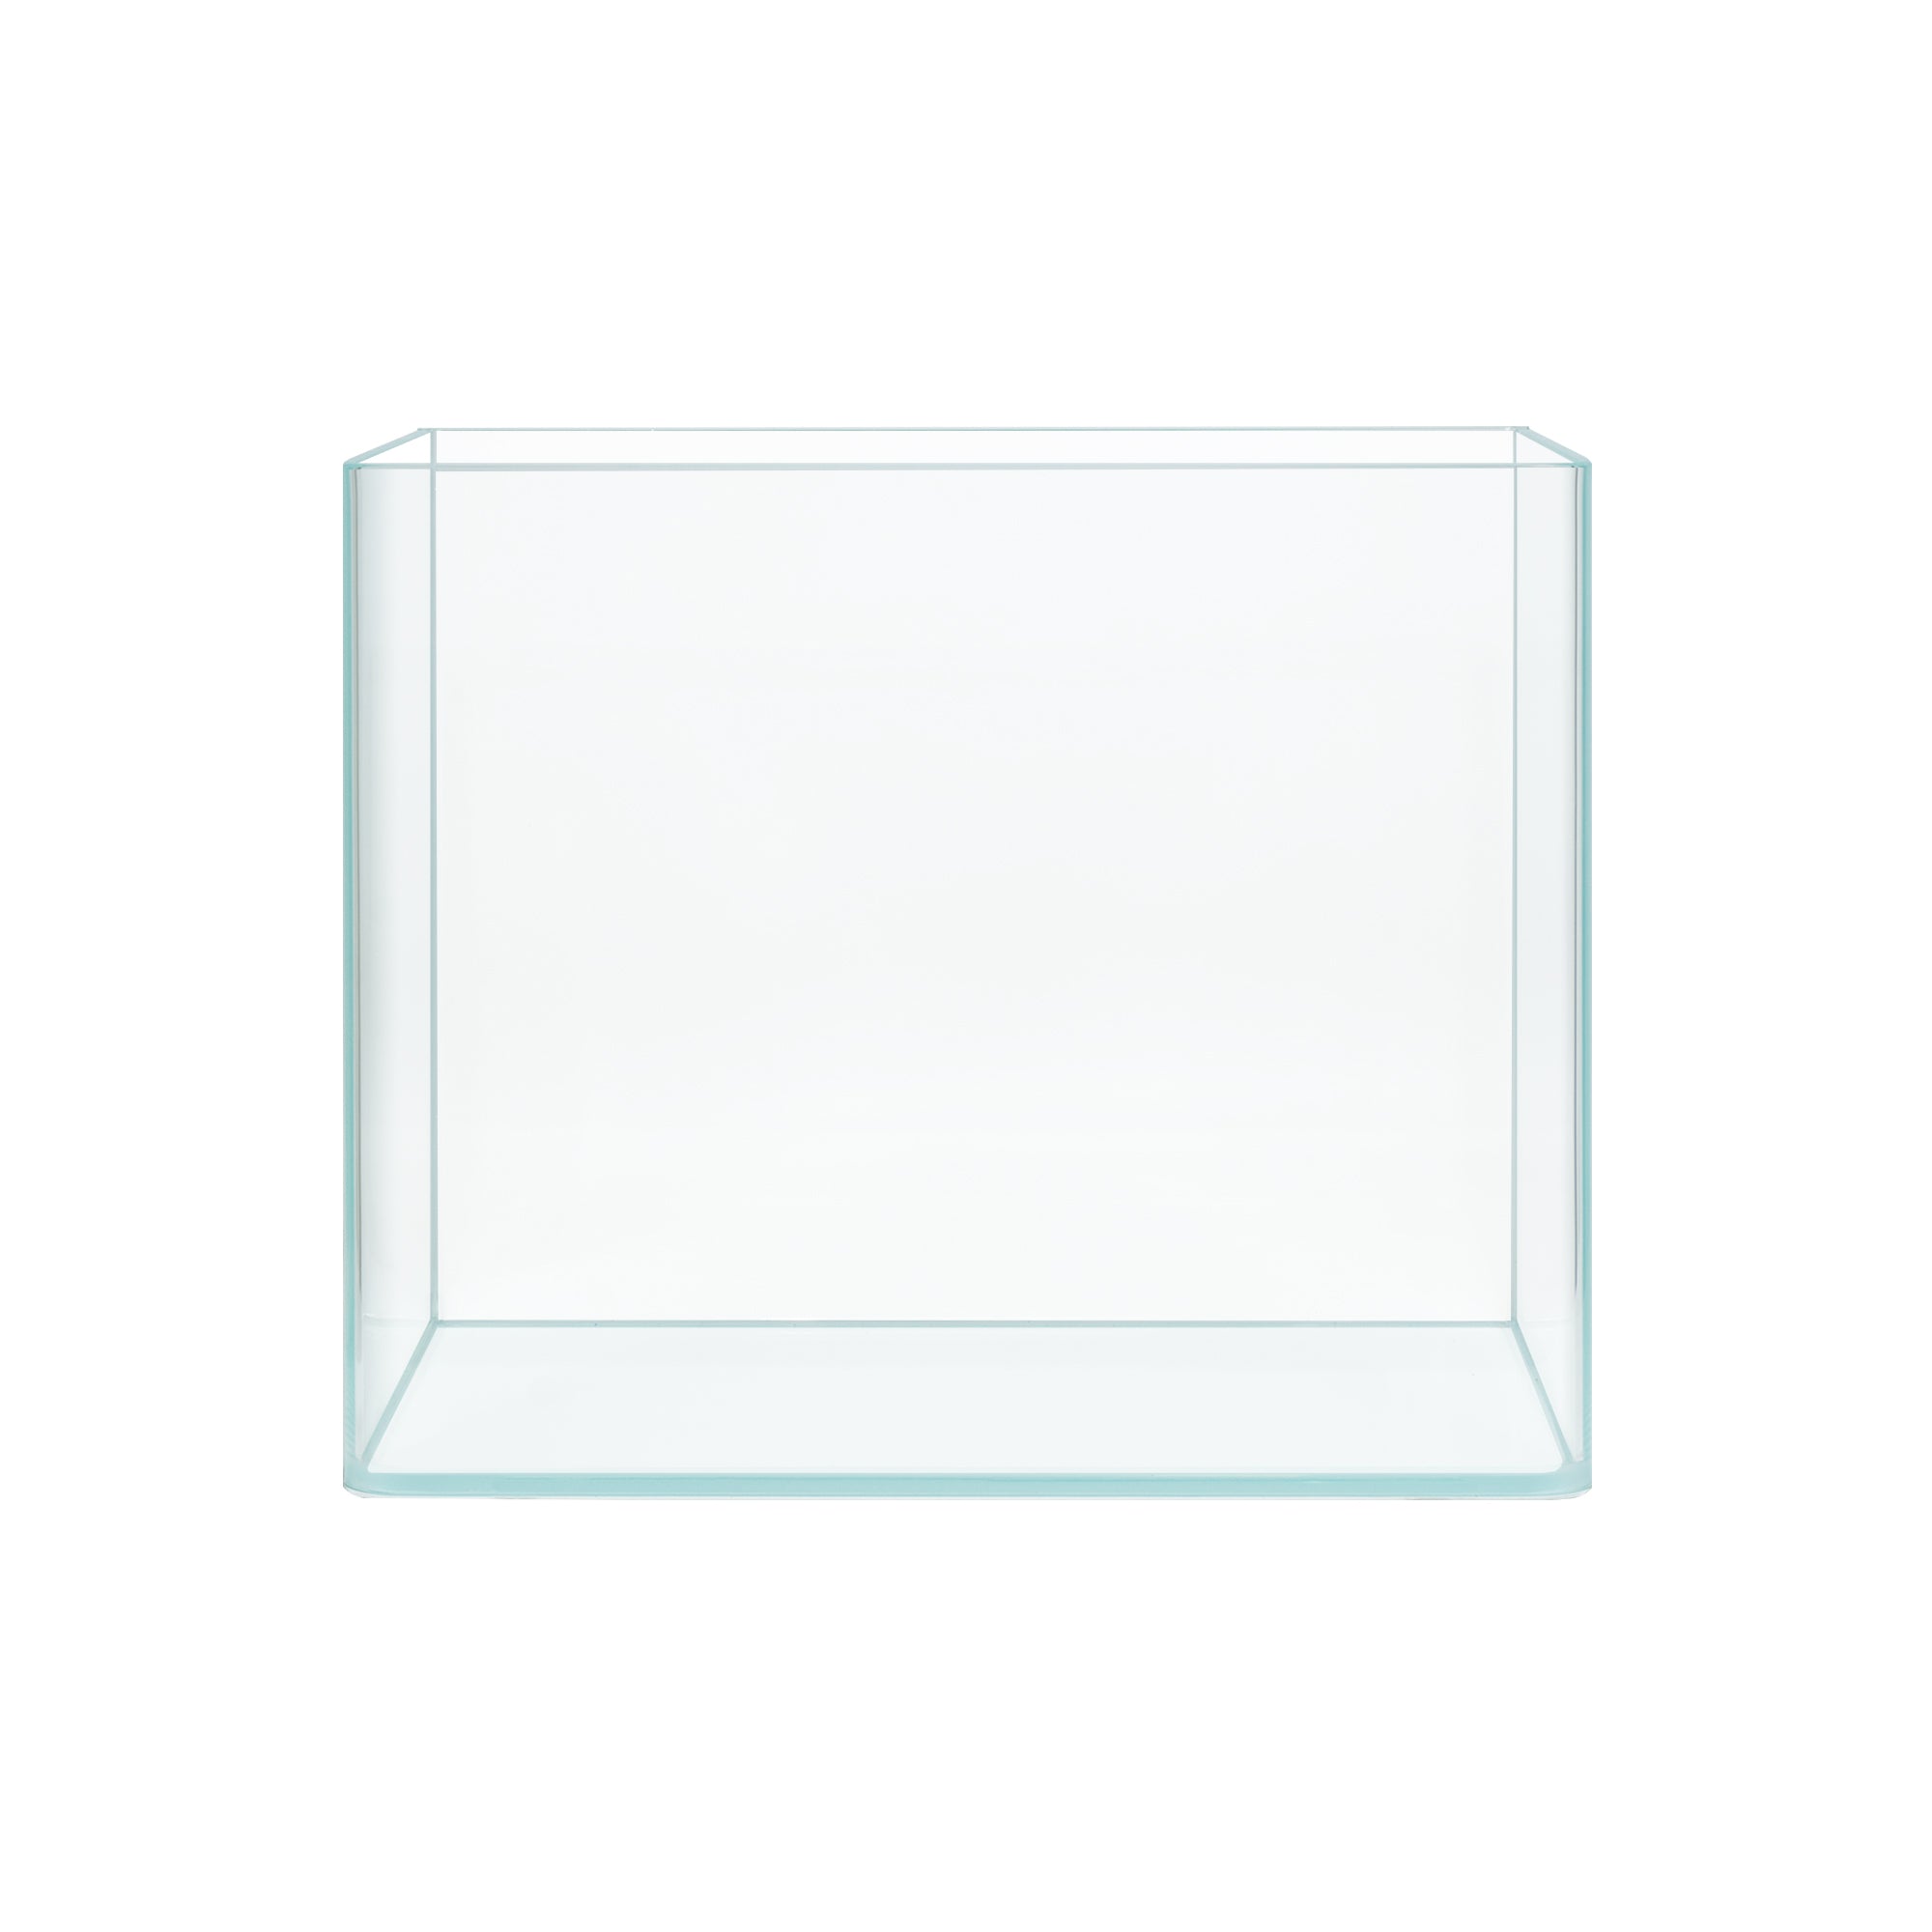 Nano Bending-Edge Glass Rimless Aquarium, Extra Clear Low iron Glass Tank, Betta Fish Tank, Aquariums Tanks, 1.8 Gallon/5.3 Gallon